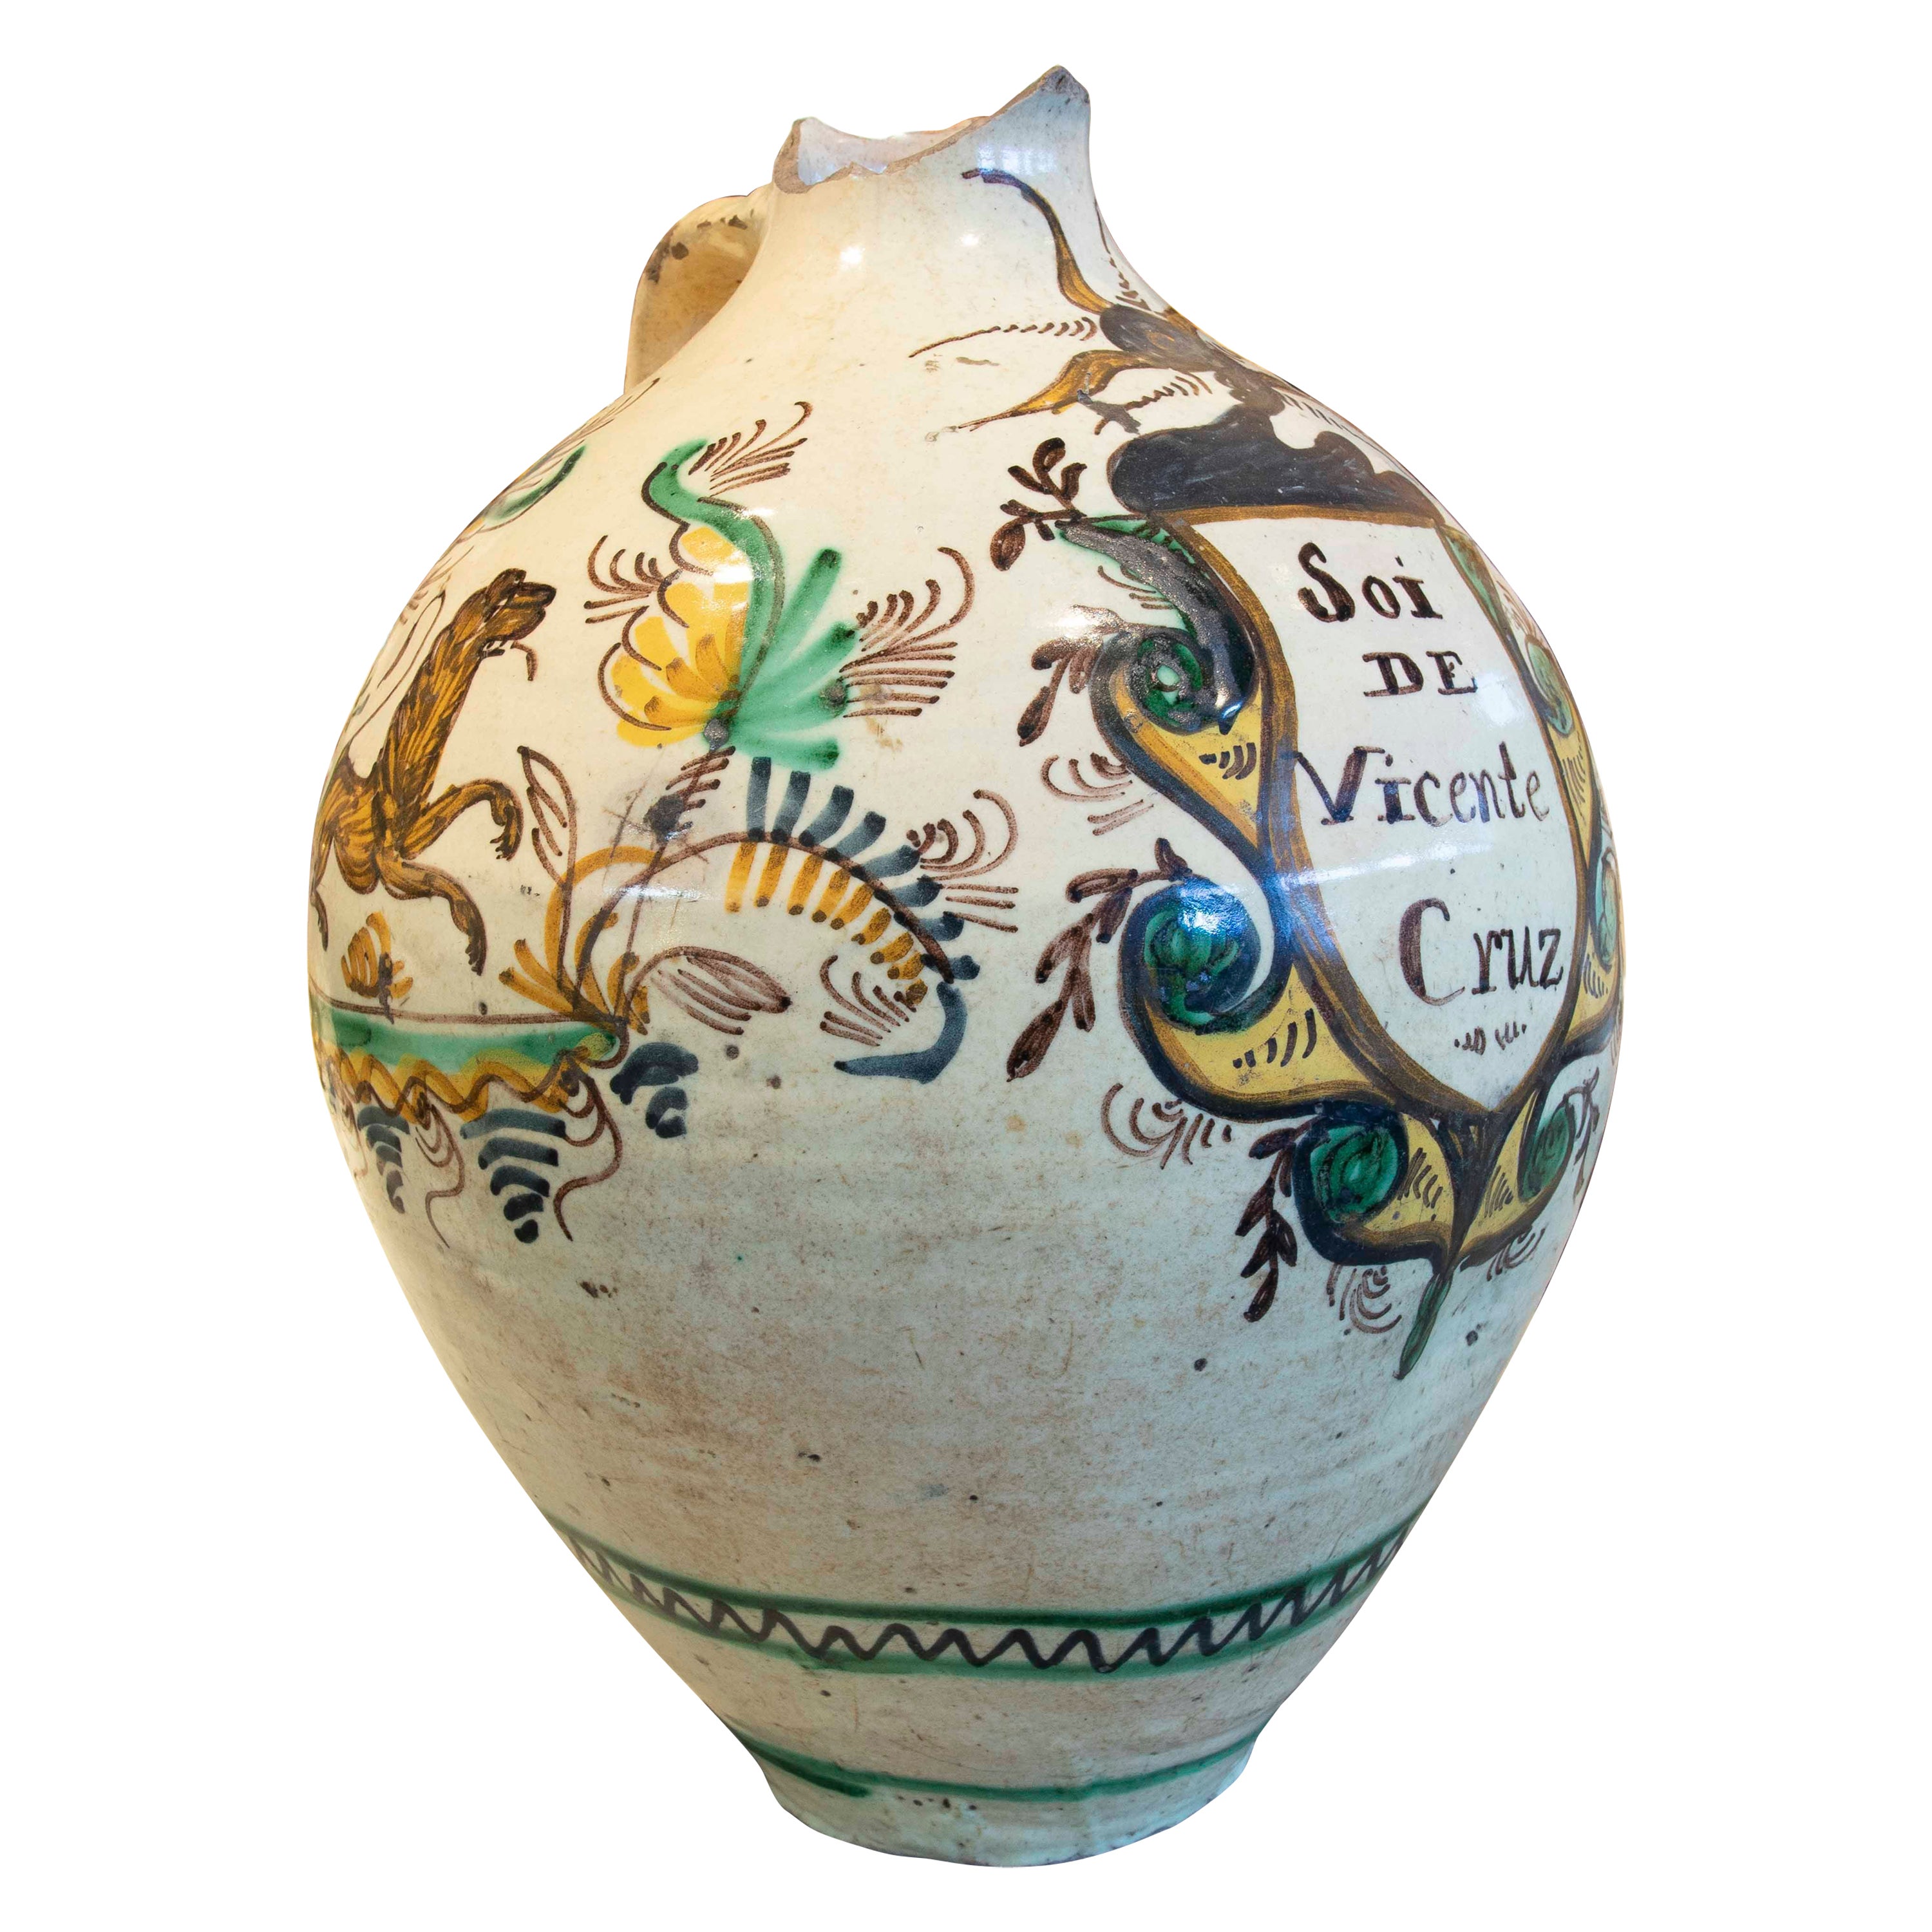 Spanish Glazed Ceramic Vase with the Inscription "Soi de Vicente Cruz" For Sale